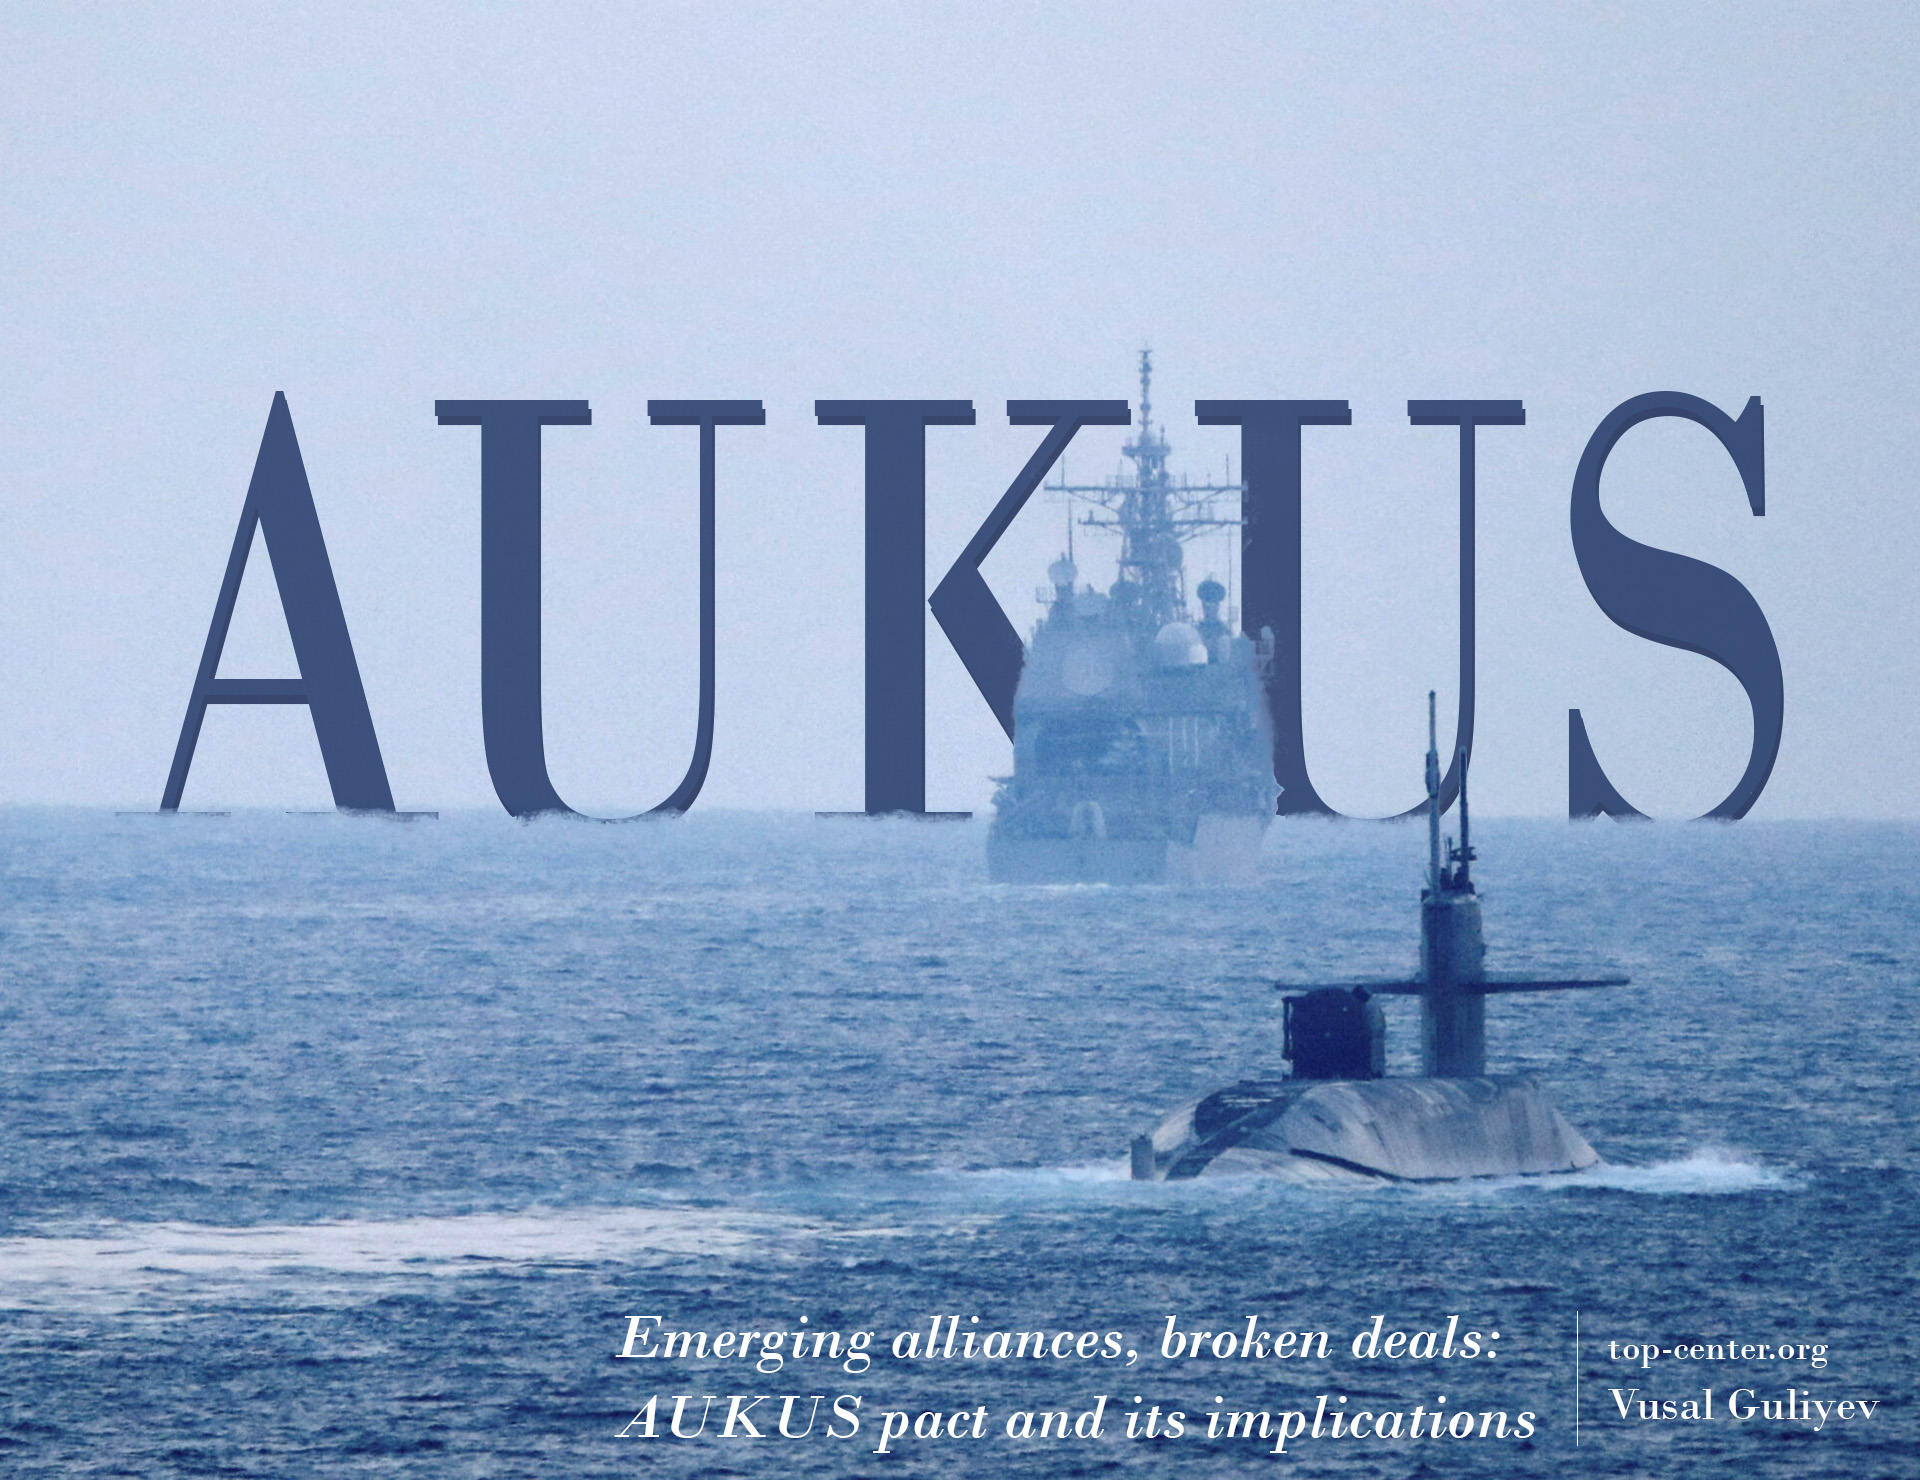 Emerging alliances, broken deals: AUKUS pact and its implications